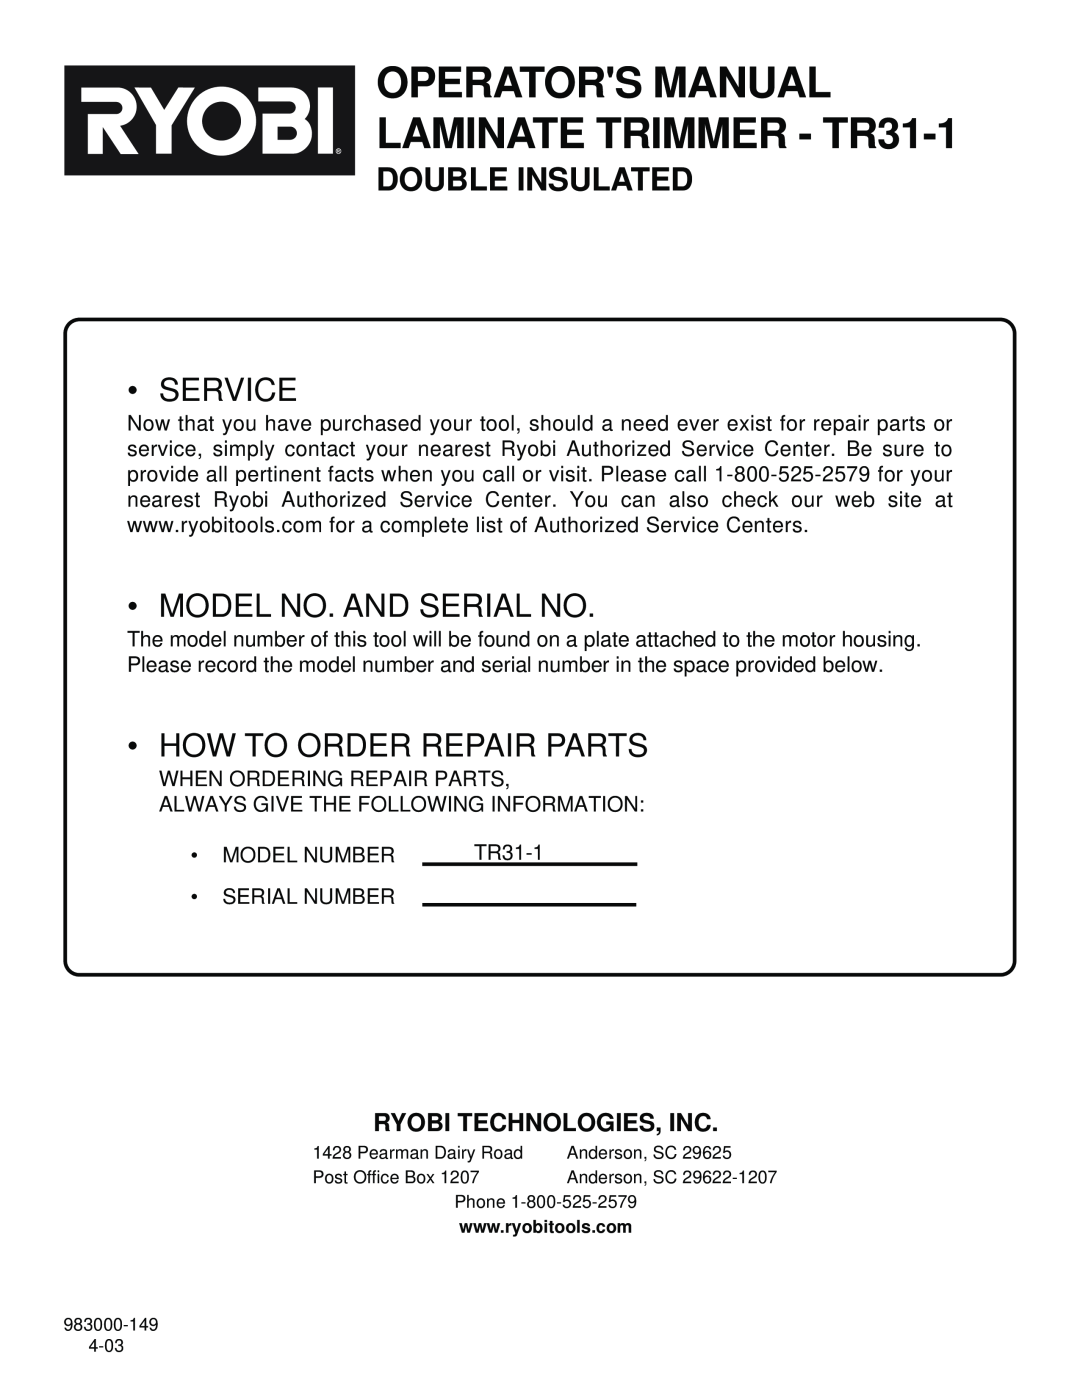 Ryobi specifications OPERATORS MANUAL LAMINATE TRIMMER - TR31-1, Ryobi Technologies, Inc, Double Insulated, Service 